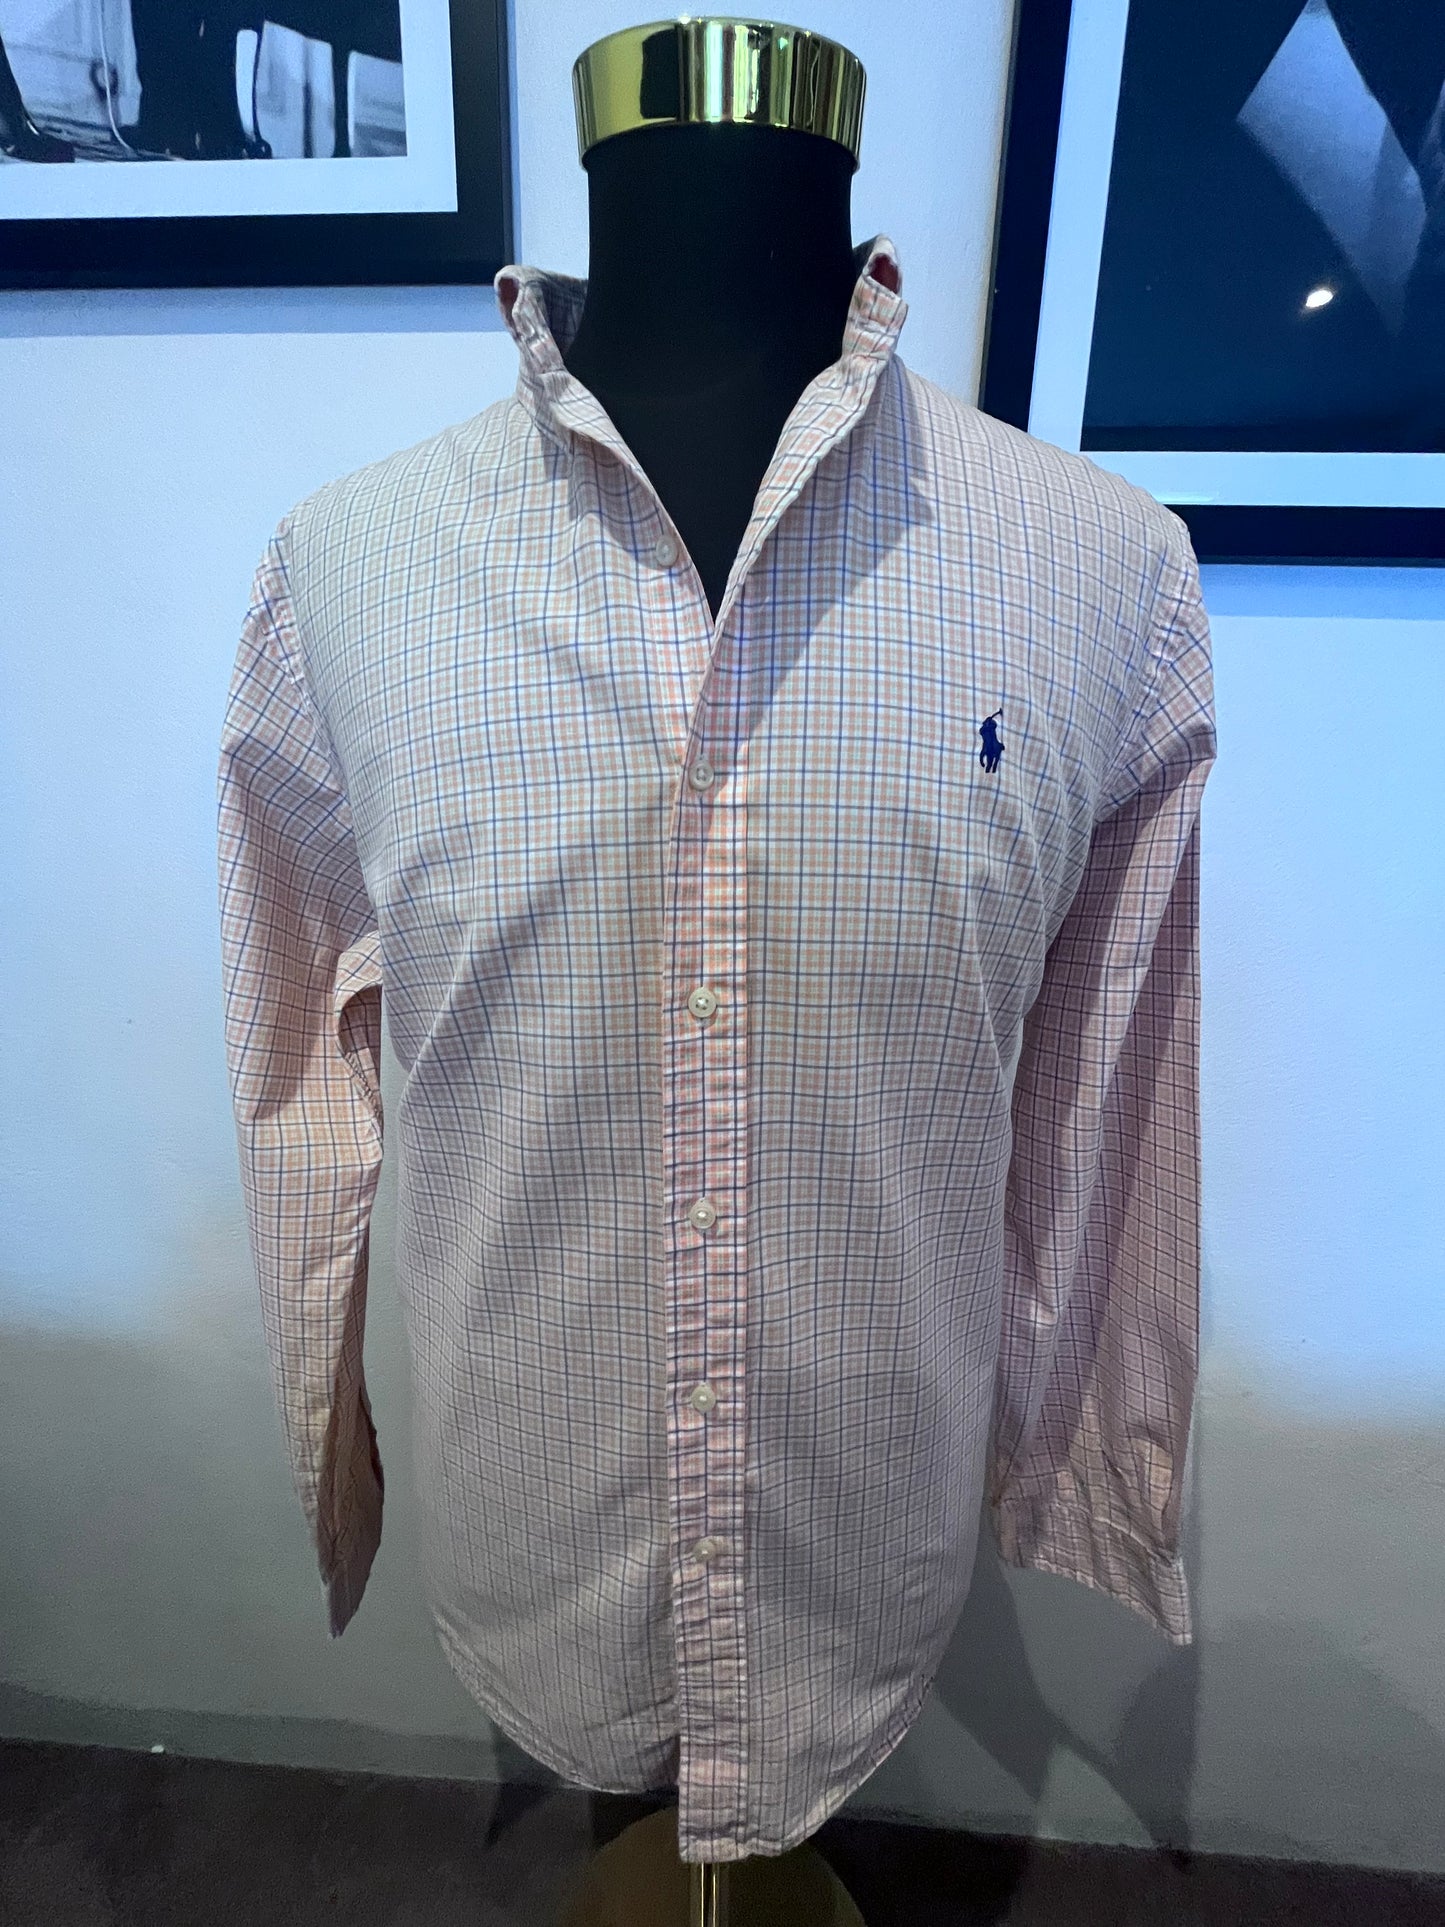 Ralph Lauren 100% Cotton Orange Check Button Down Shirt Size M Custom Fit, 15/32